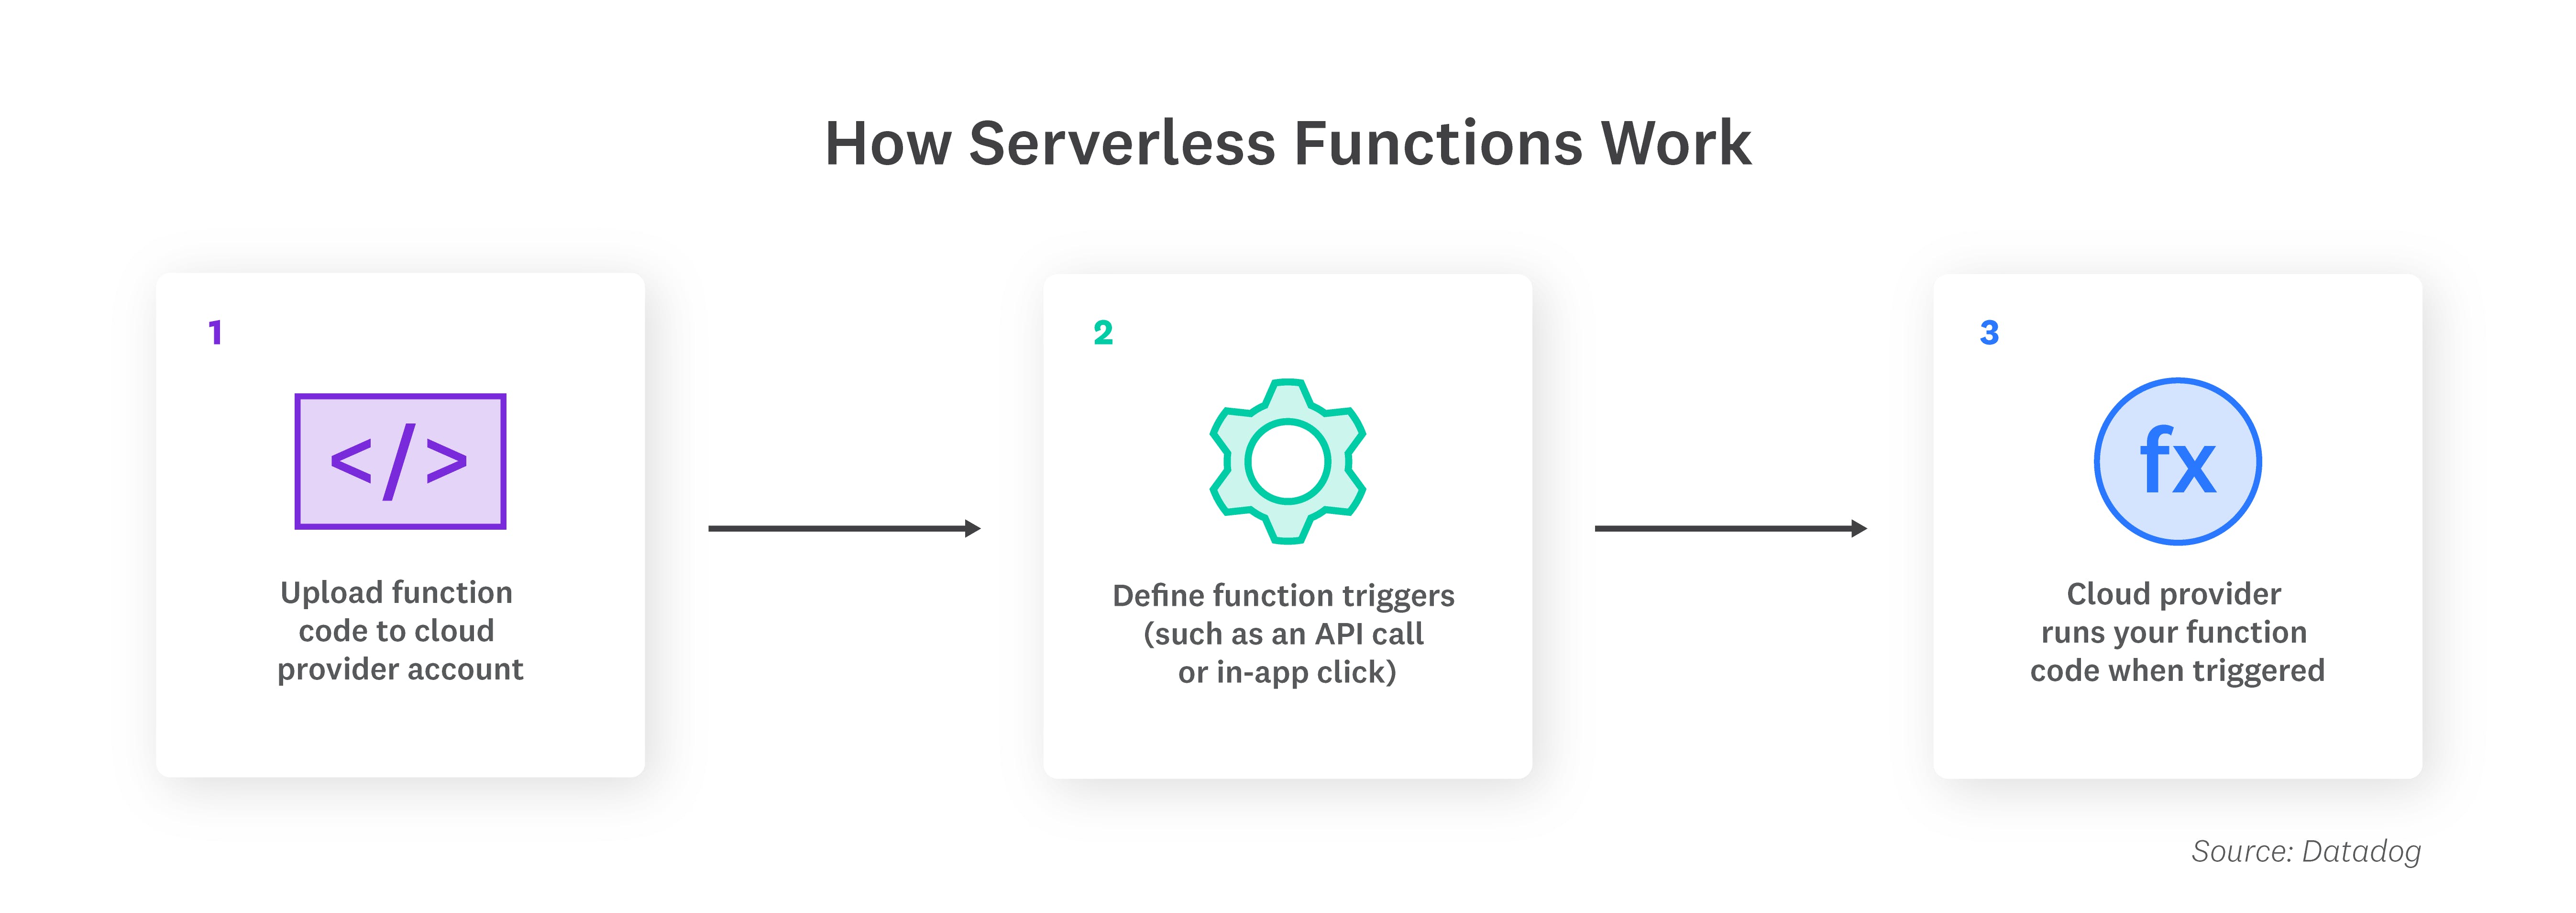 A three-step flow chart explaining how serverless functions work in serverless computing.